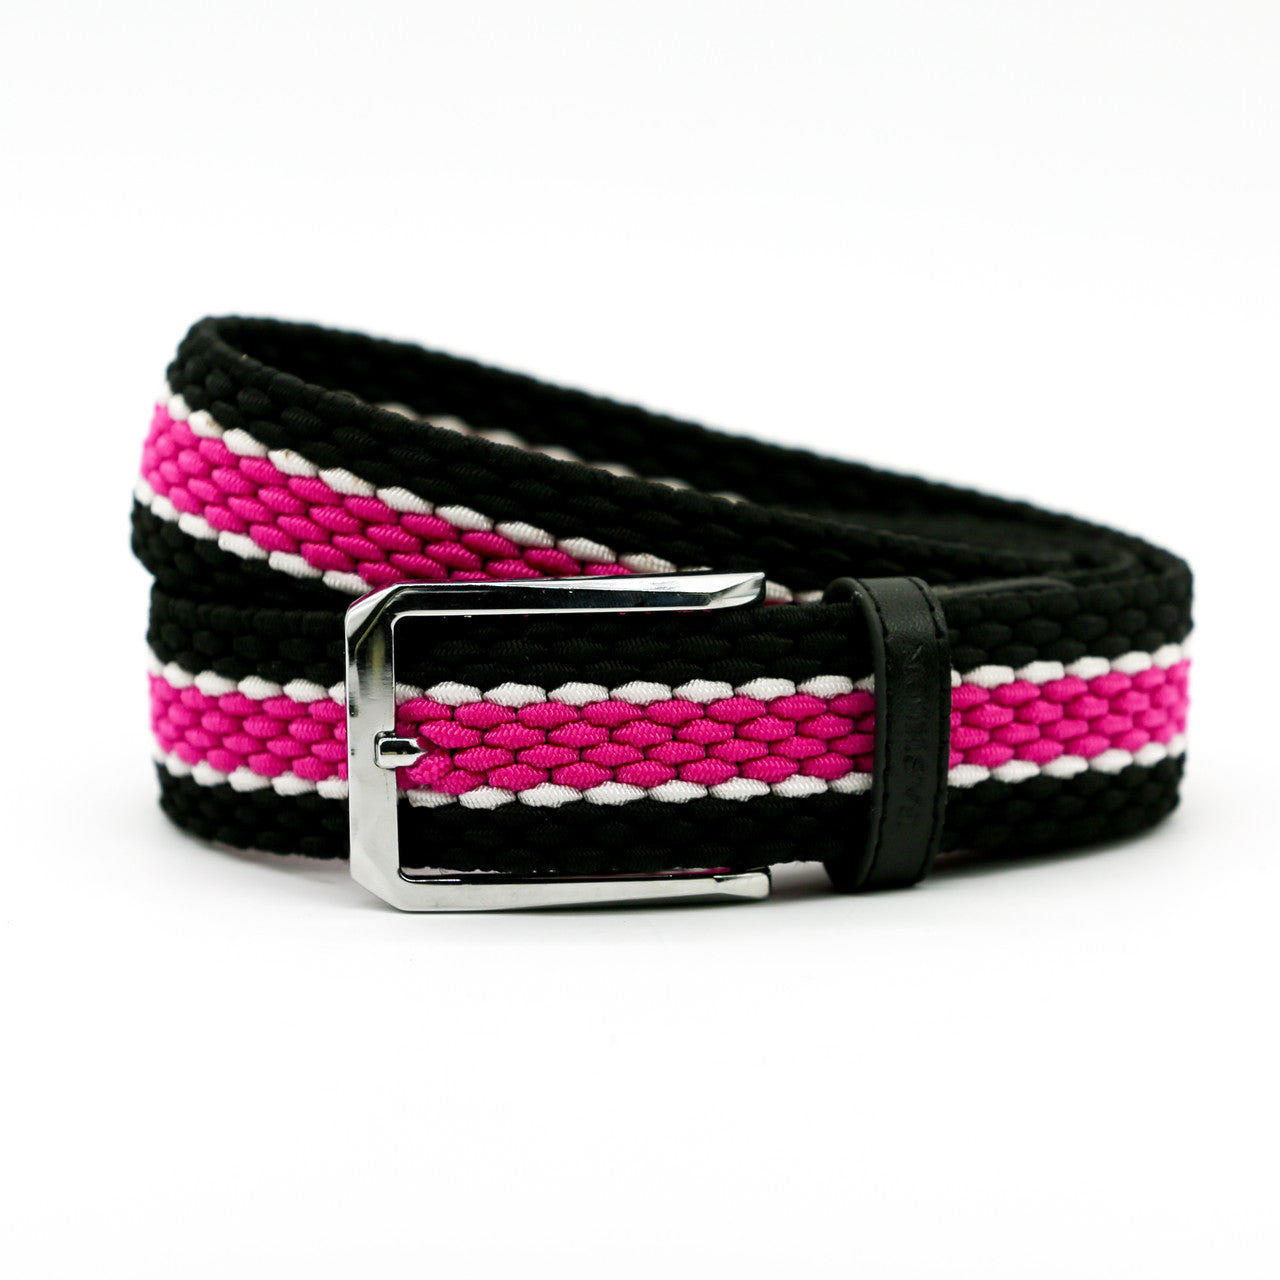 Belt - Black with Pink Middle